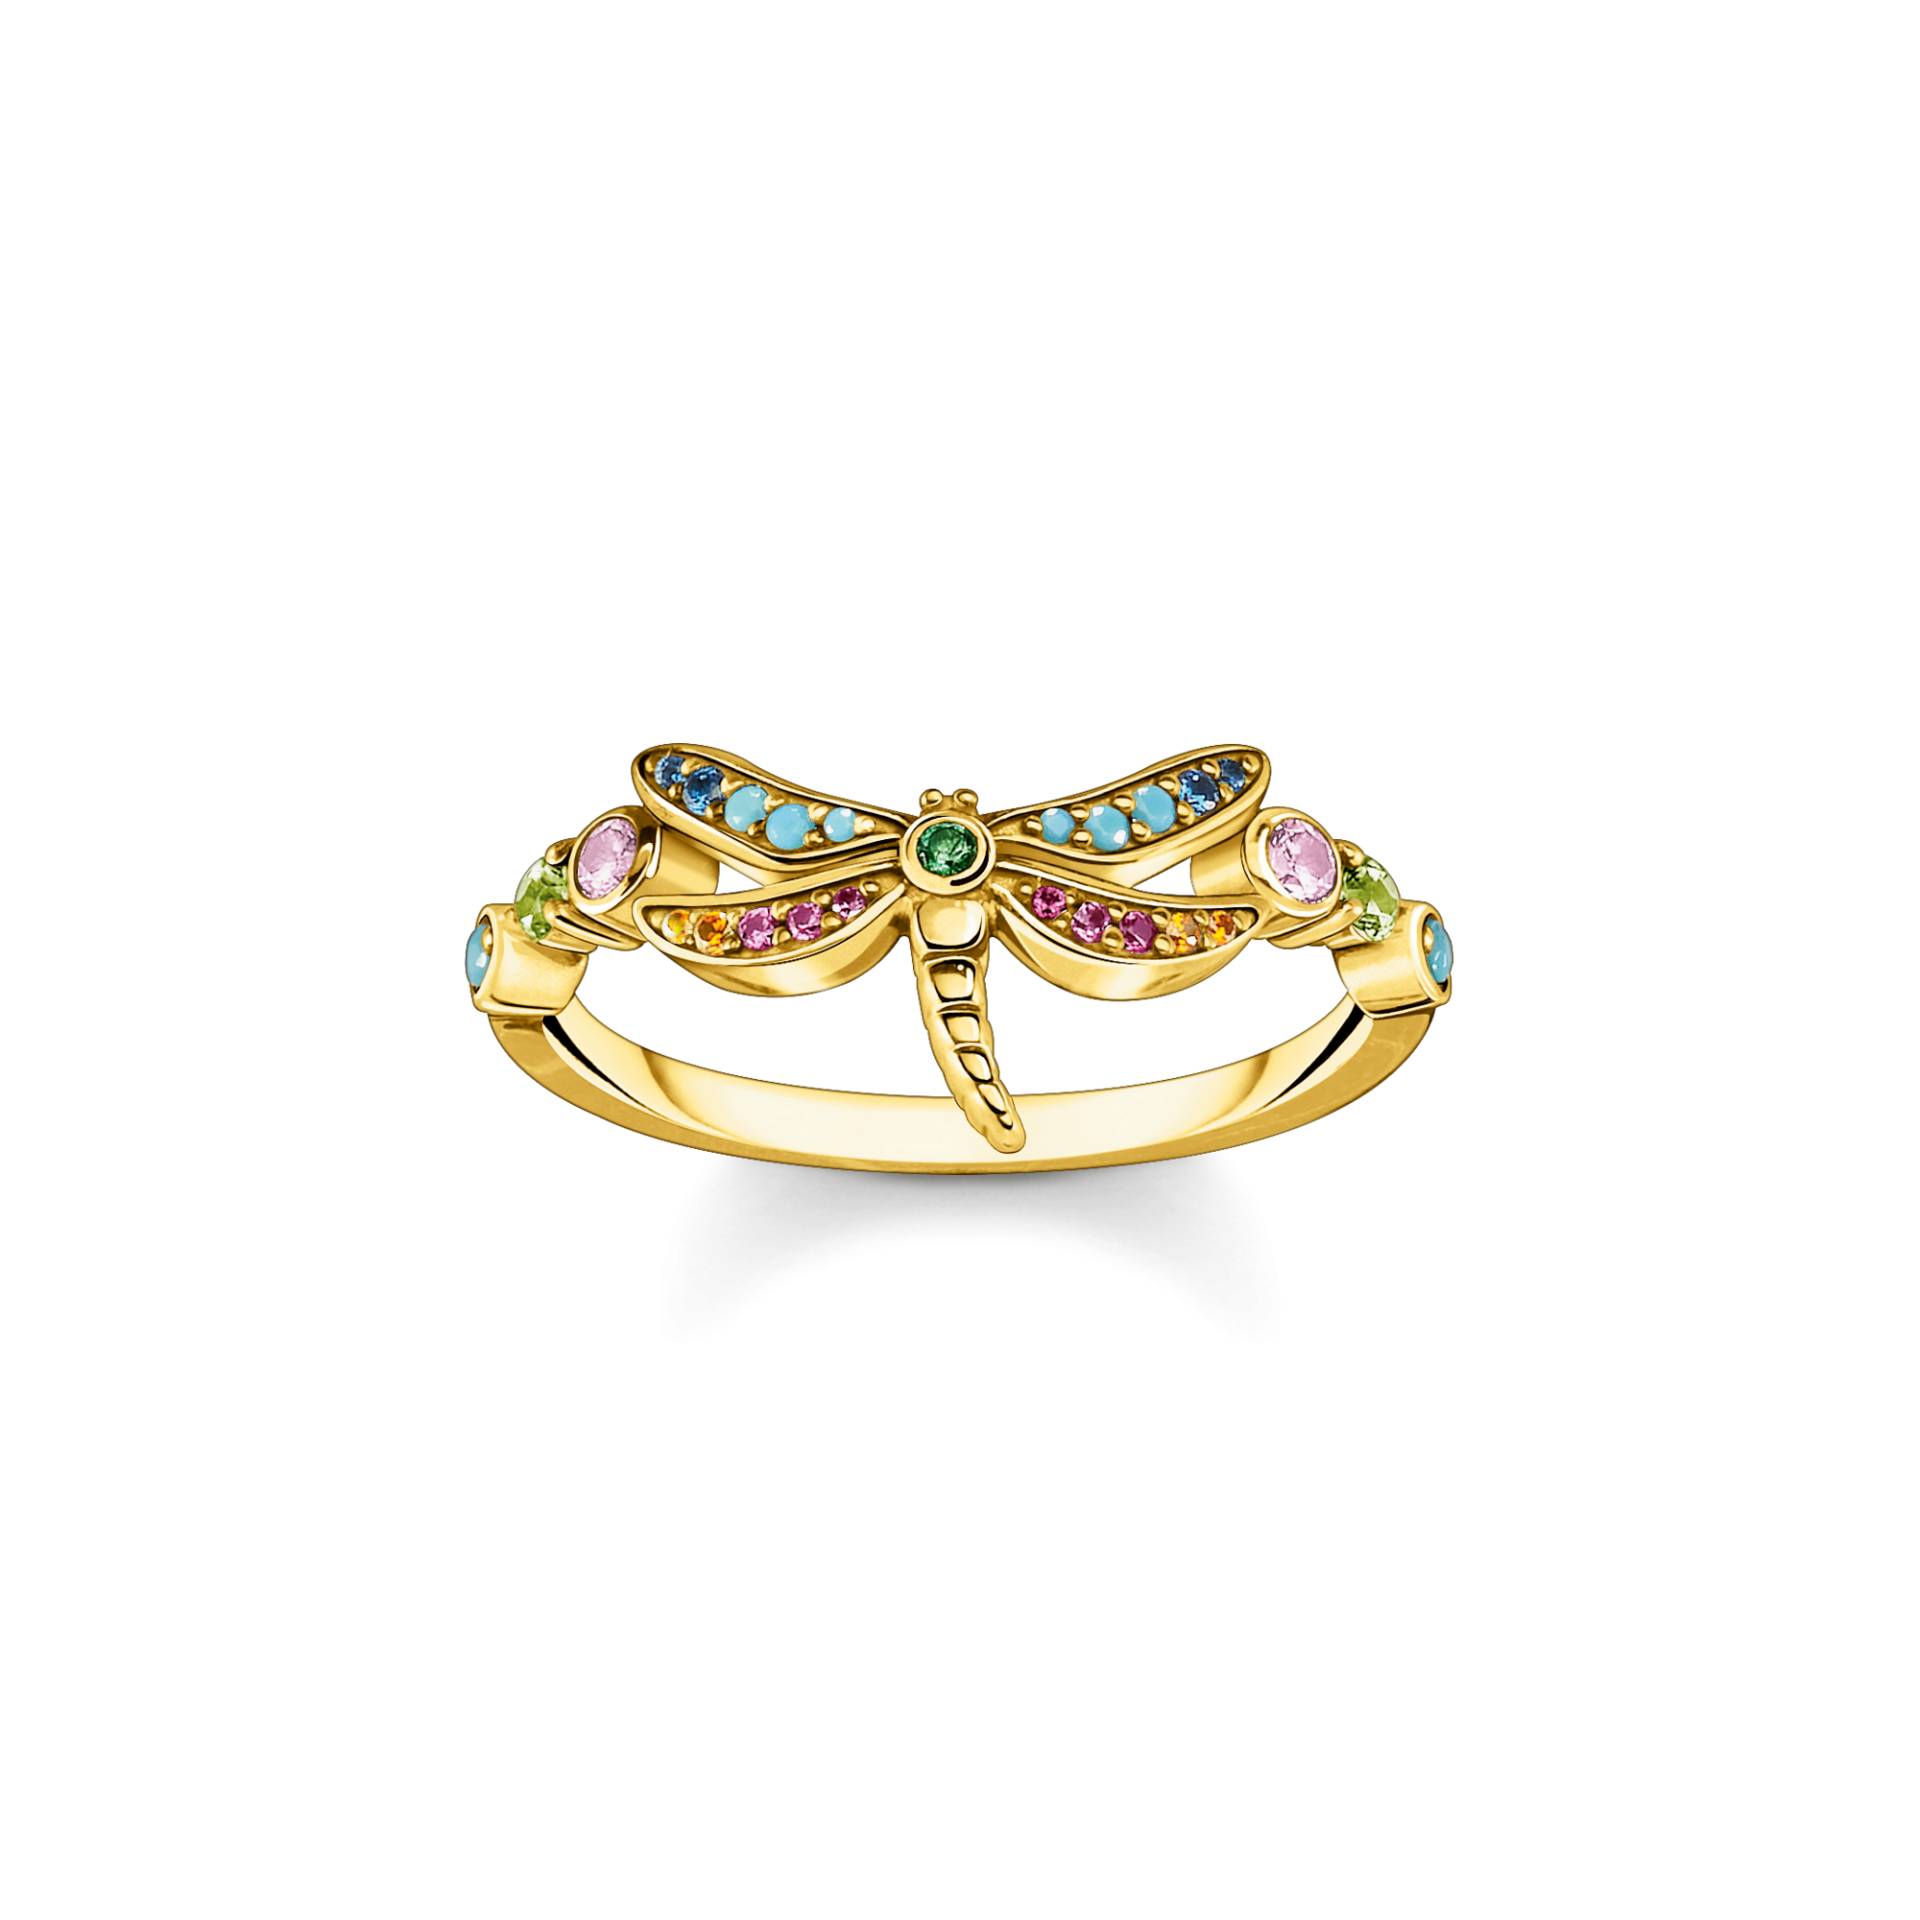 Thomas Sabo Ring Libelle mit bunten Steinen gold mehrfarbig TR2383-315-7-52 von Thomas Sabo